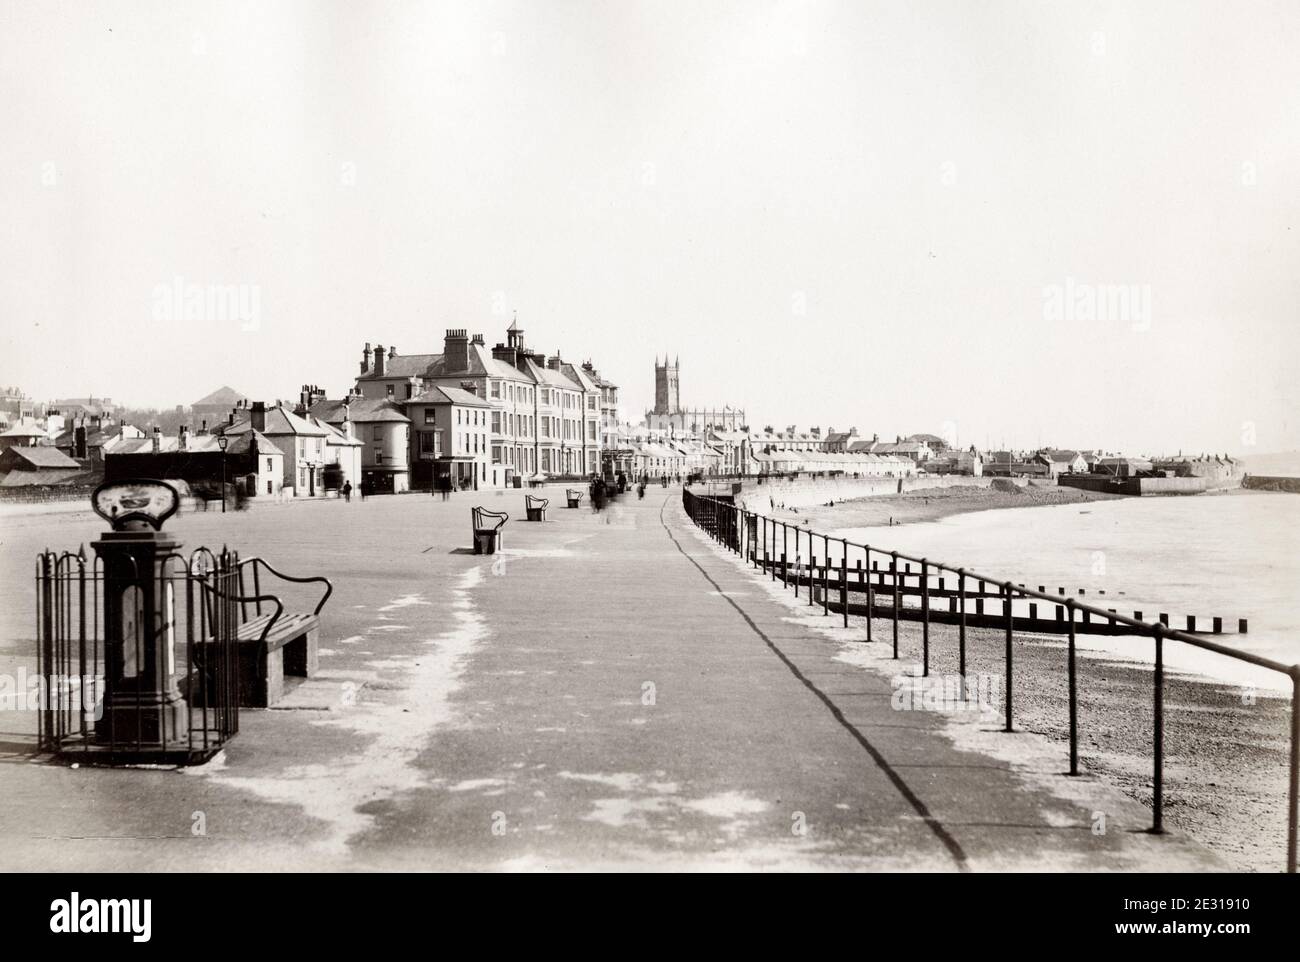 Vintage 19th century photograph: The Parade, Penzance, Cornwall, England. Stock Photo